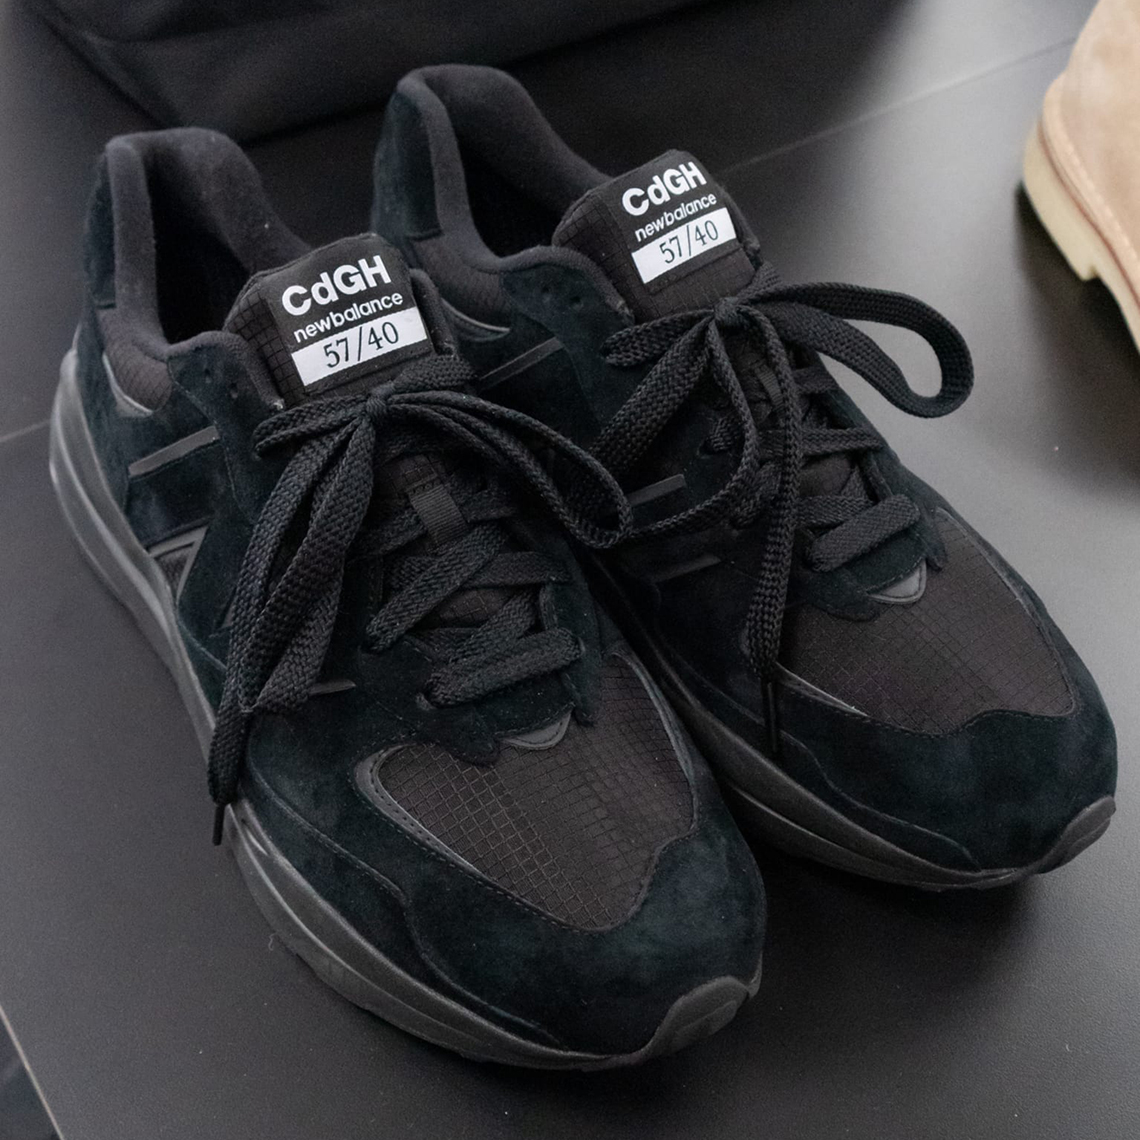 A close-up look at Jennifer Garners New Balance sneakers